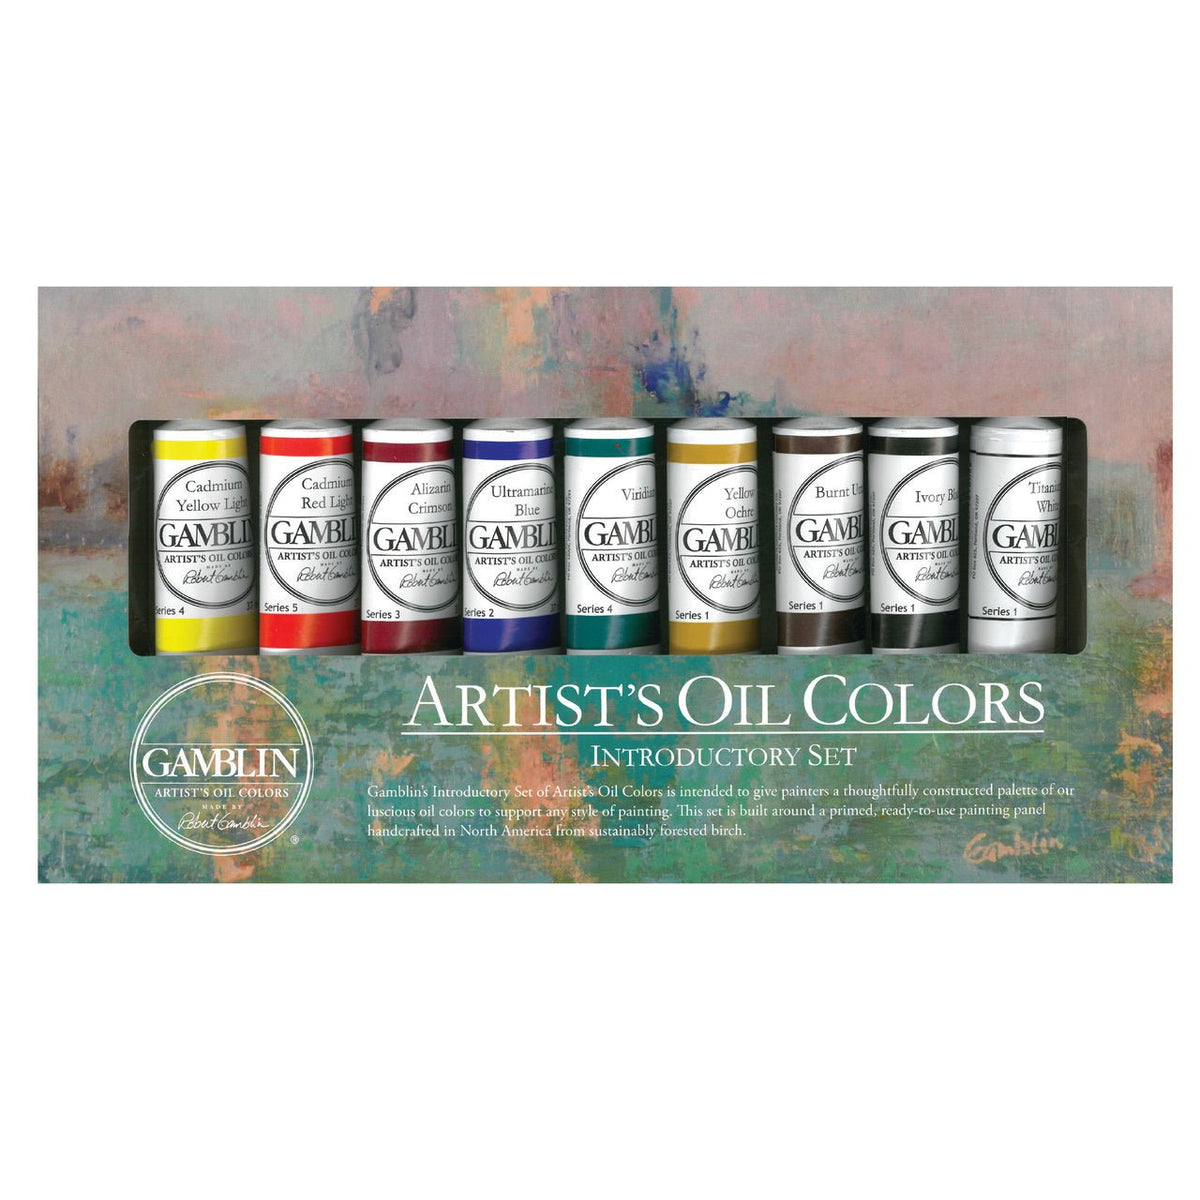 Gamblin Artist's Oil Colors Introductory Set - merriartist.com